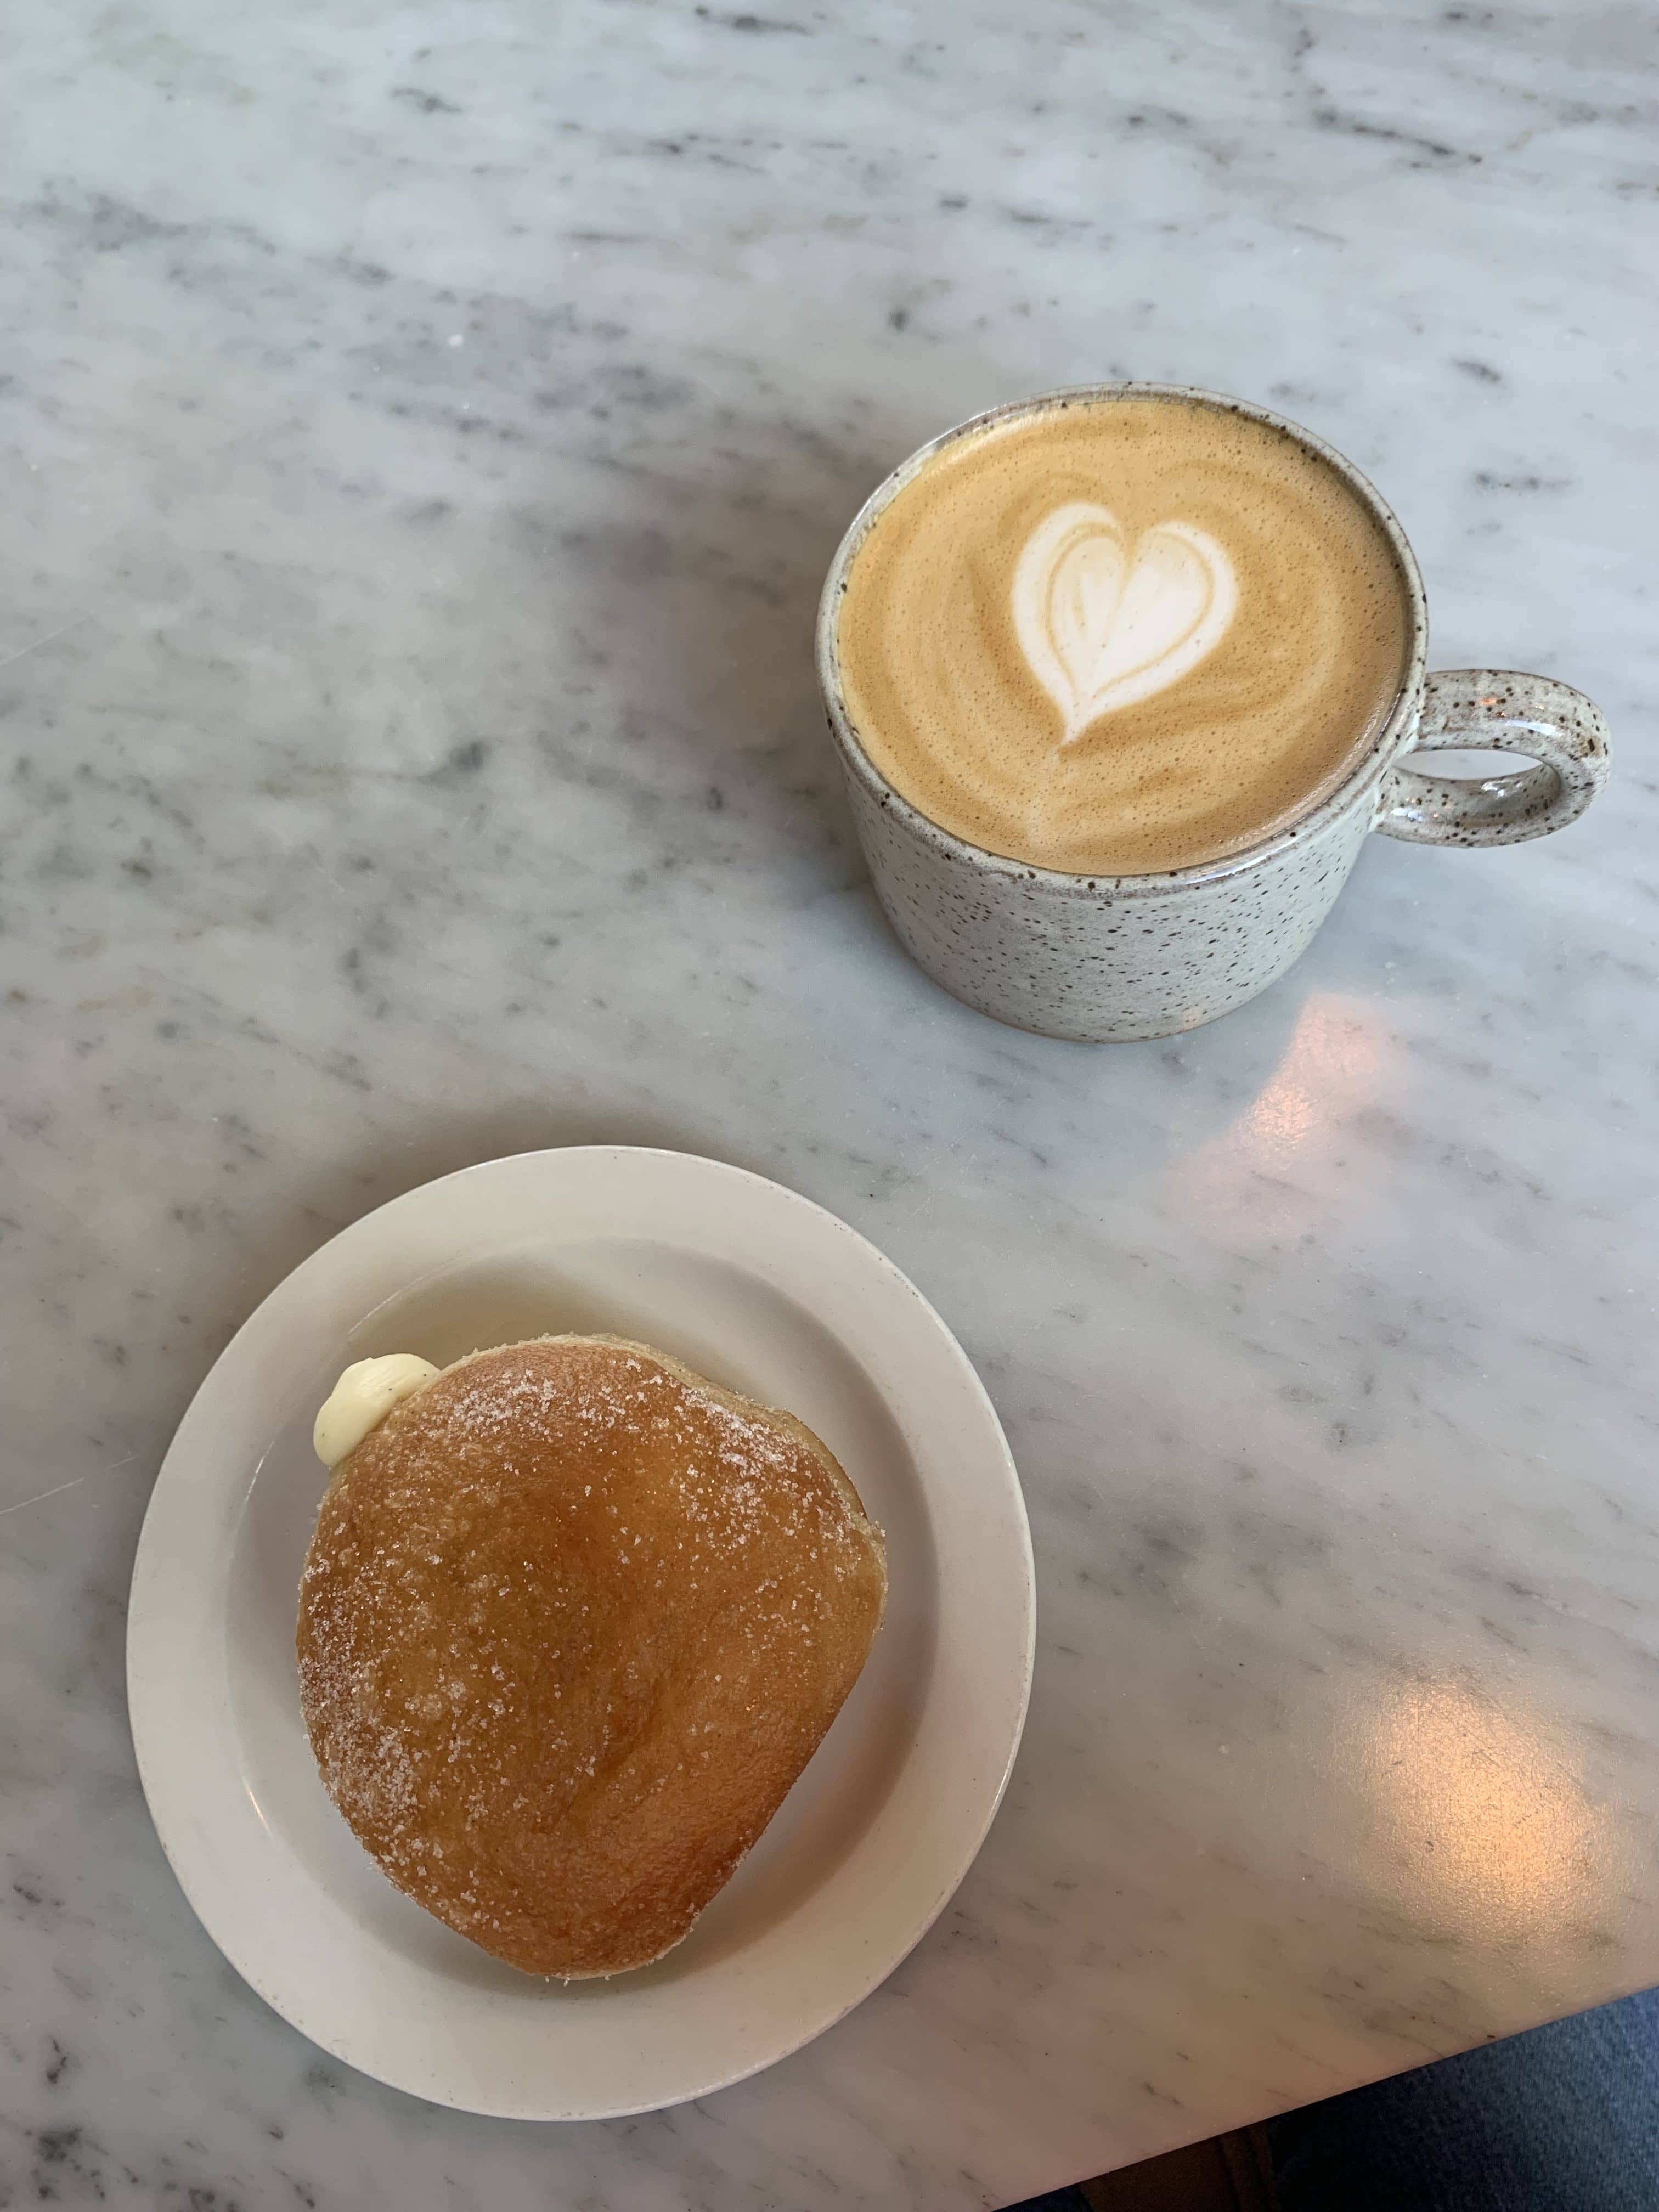 doughnut next to a latte